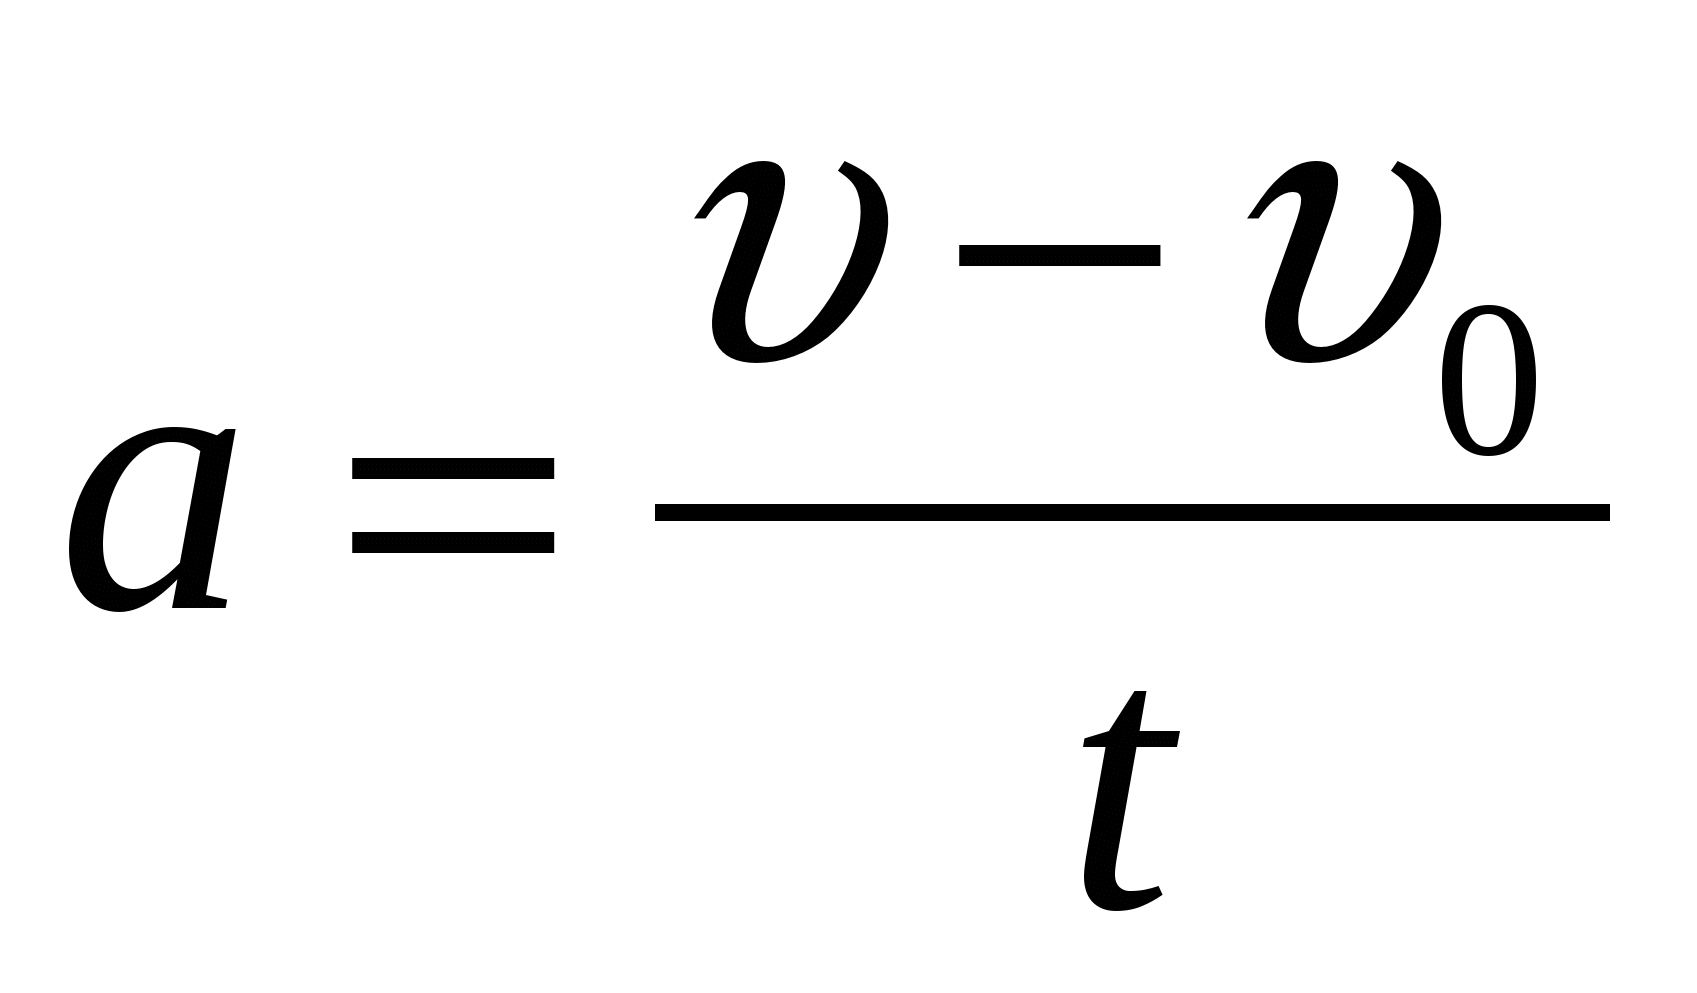 V0 0 формула